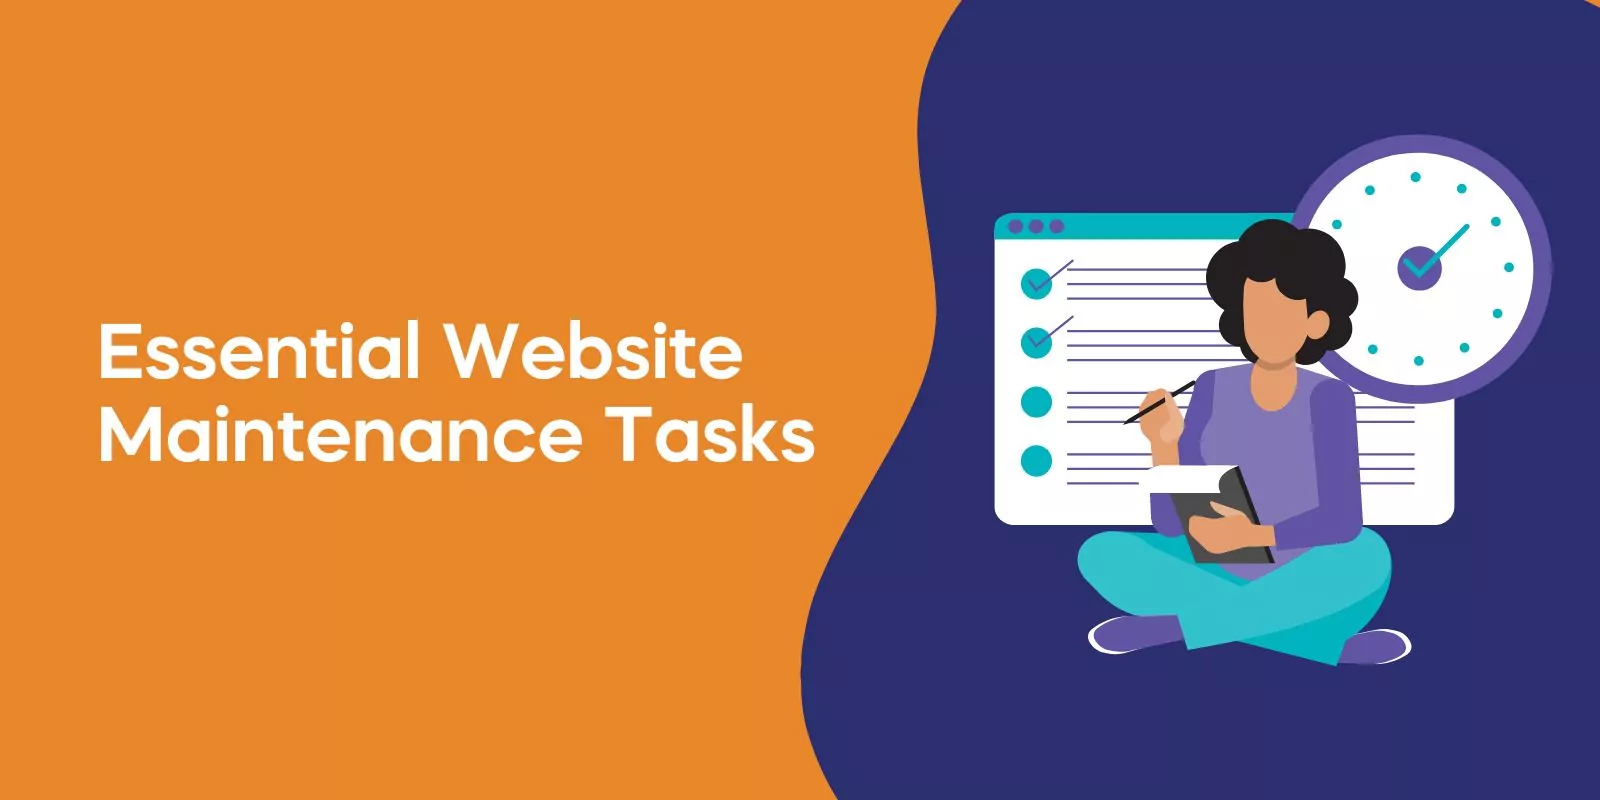 Essential Website Maintenance Tasks